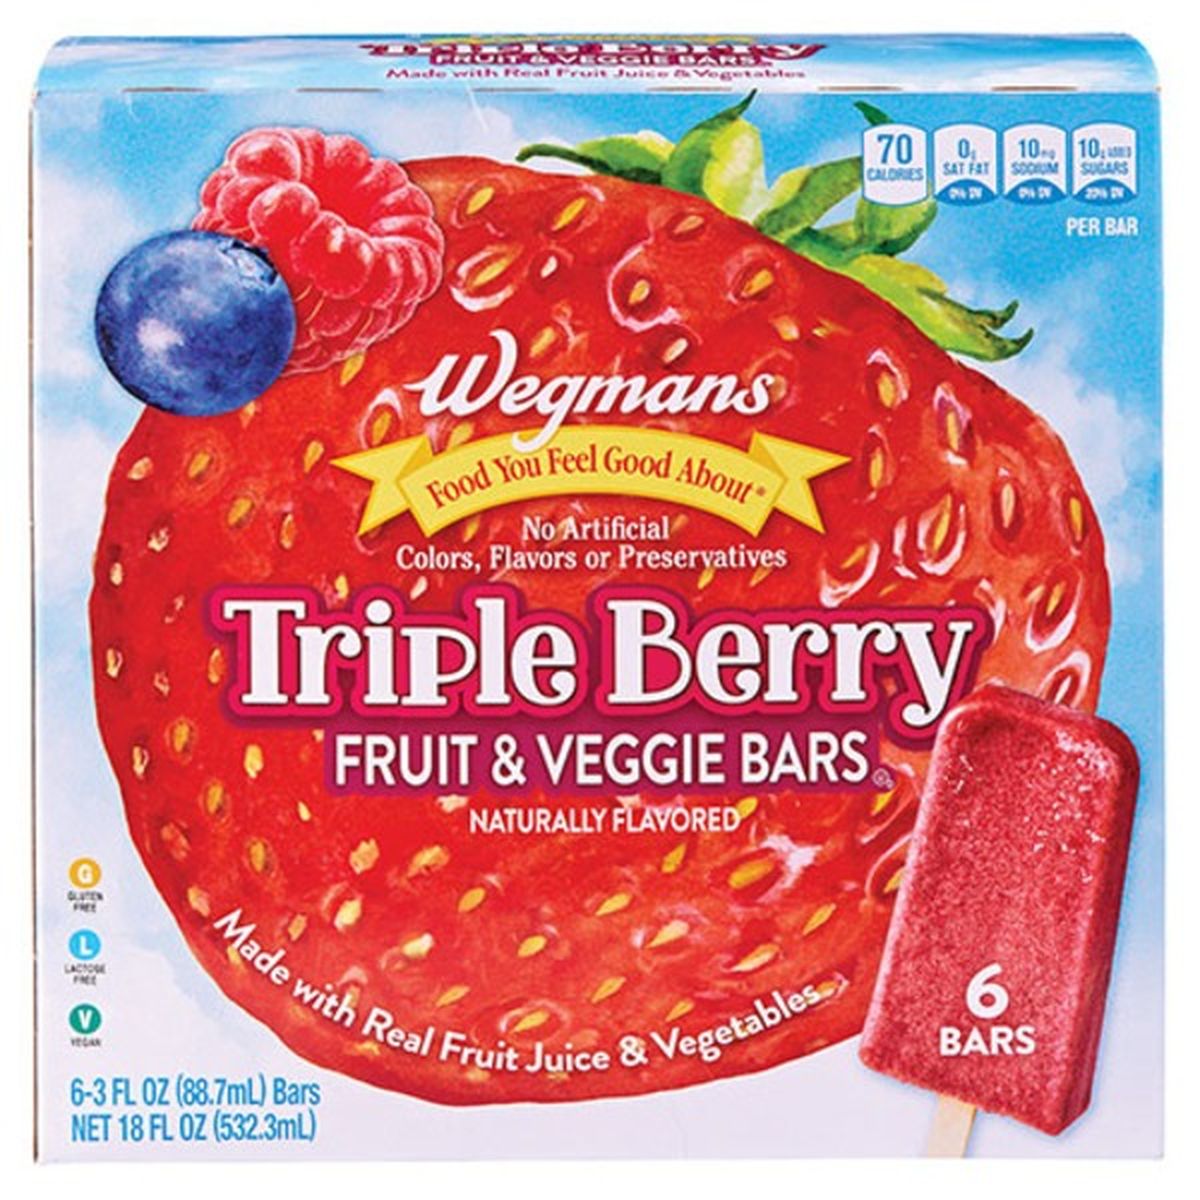 Calories in Wegmans Triple Berry Fruit & Veggie Bars